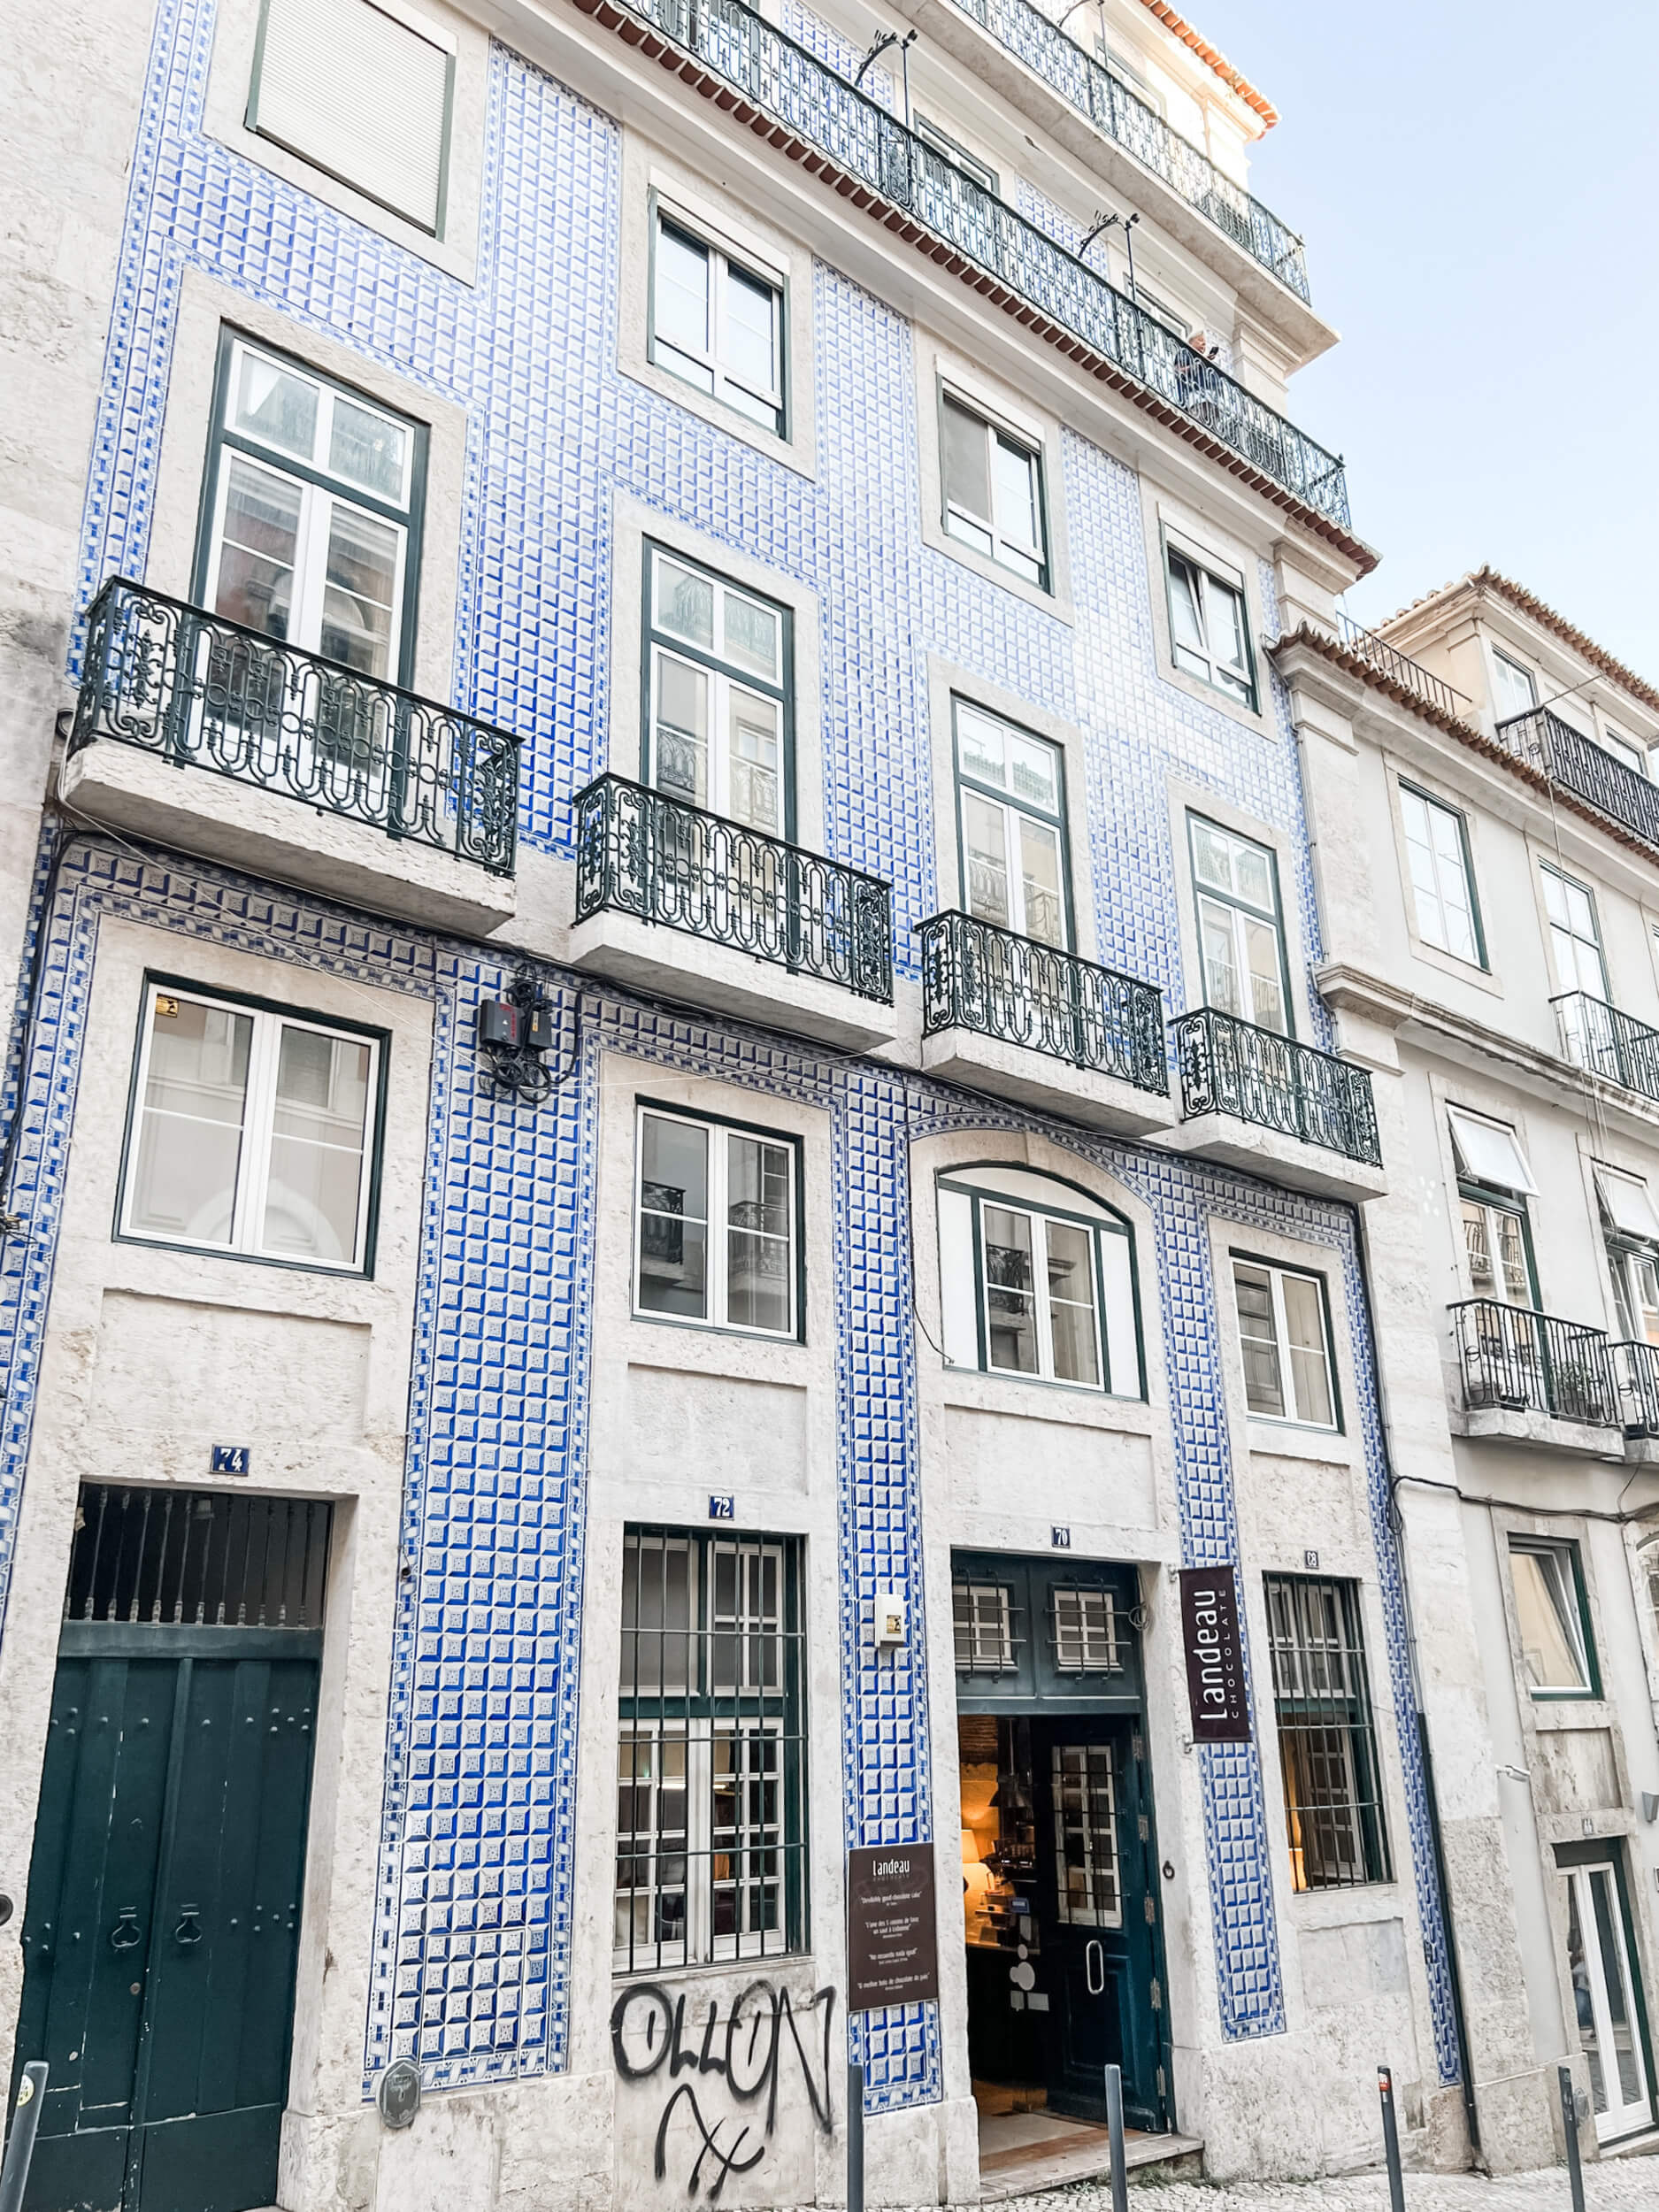 landeau in lisbon portugal inside a blue and white tiled building